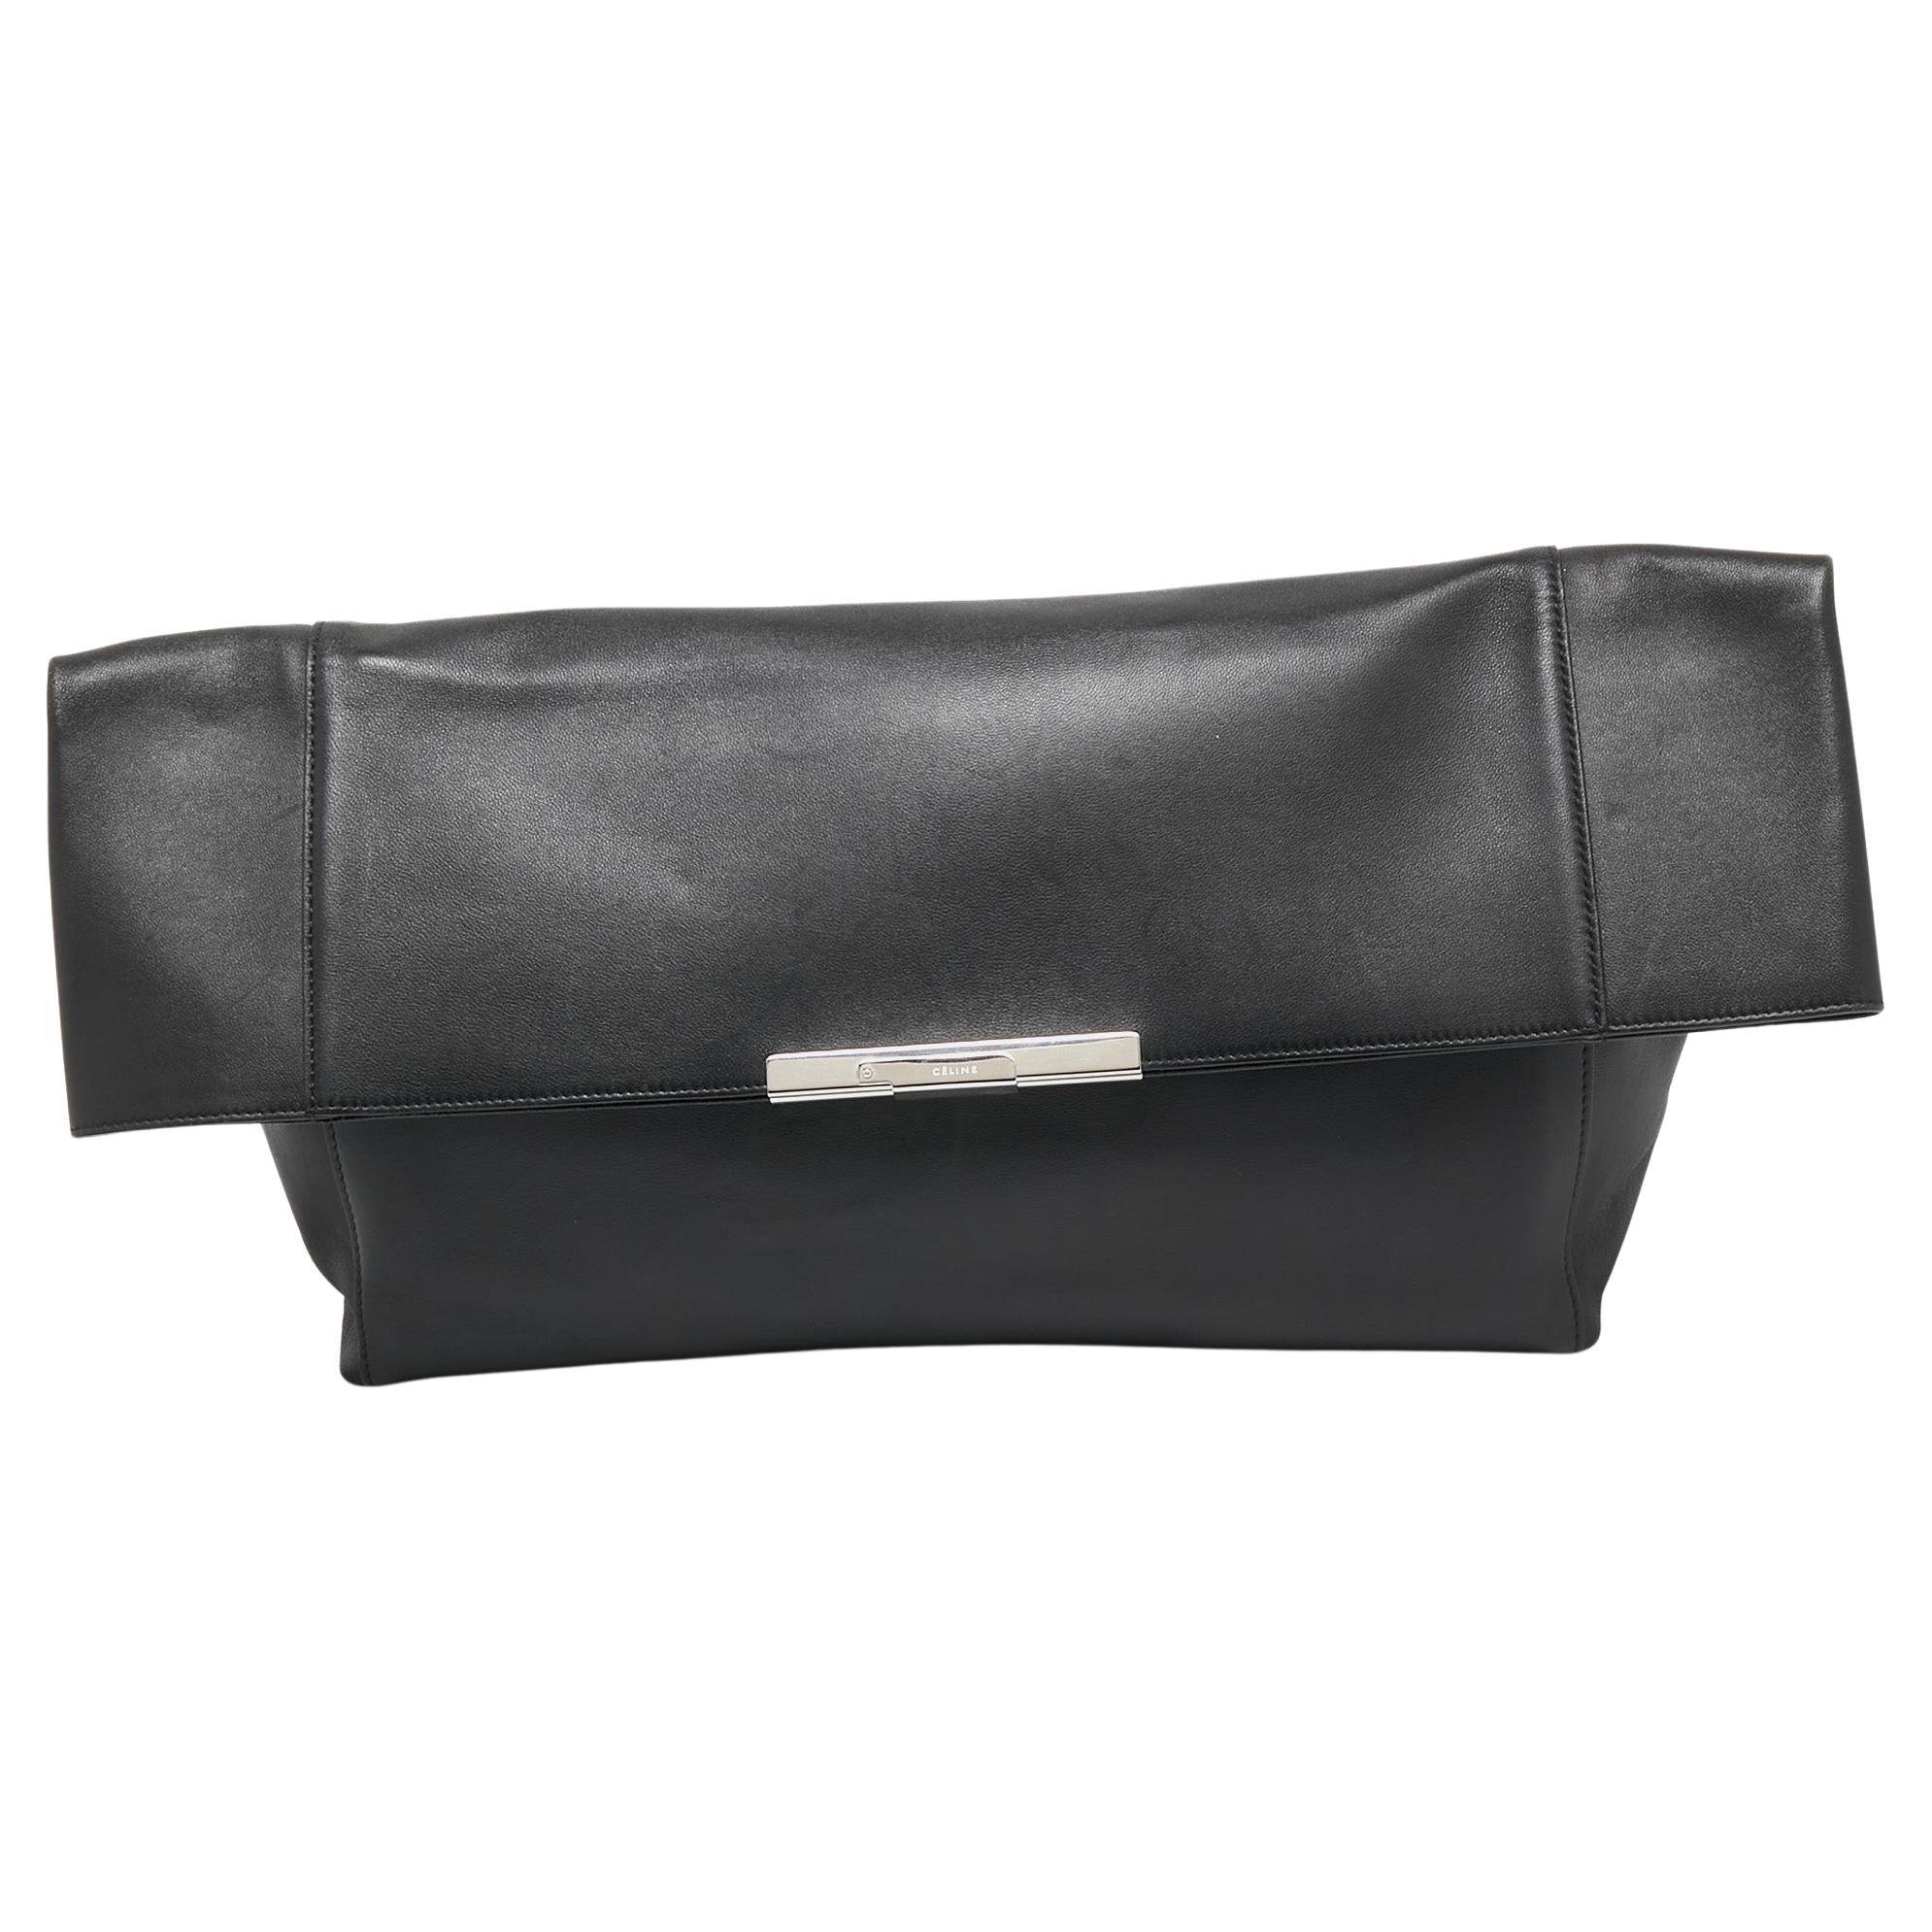 Celine Black Leather Cabas Fold Over Clutch